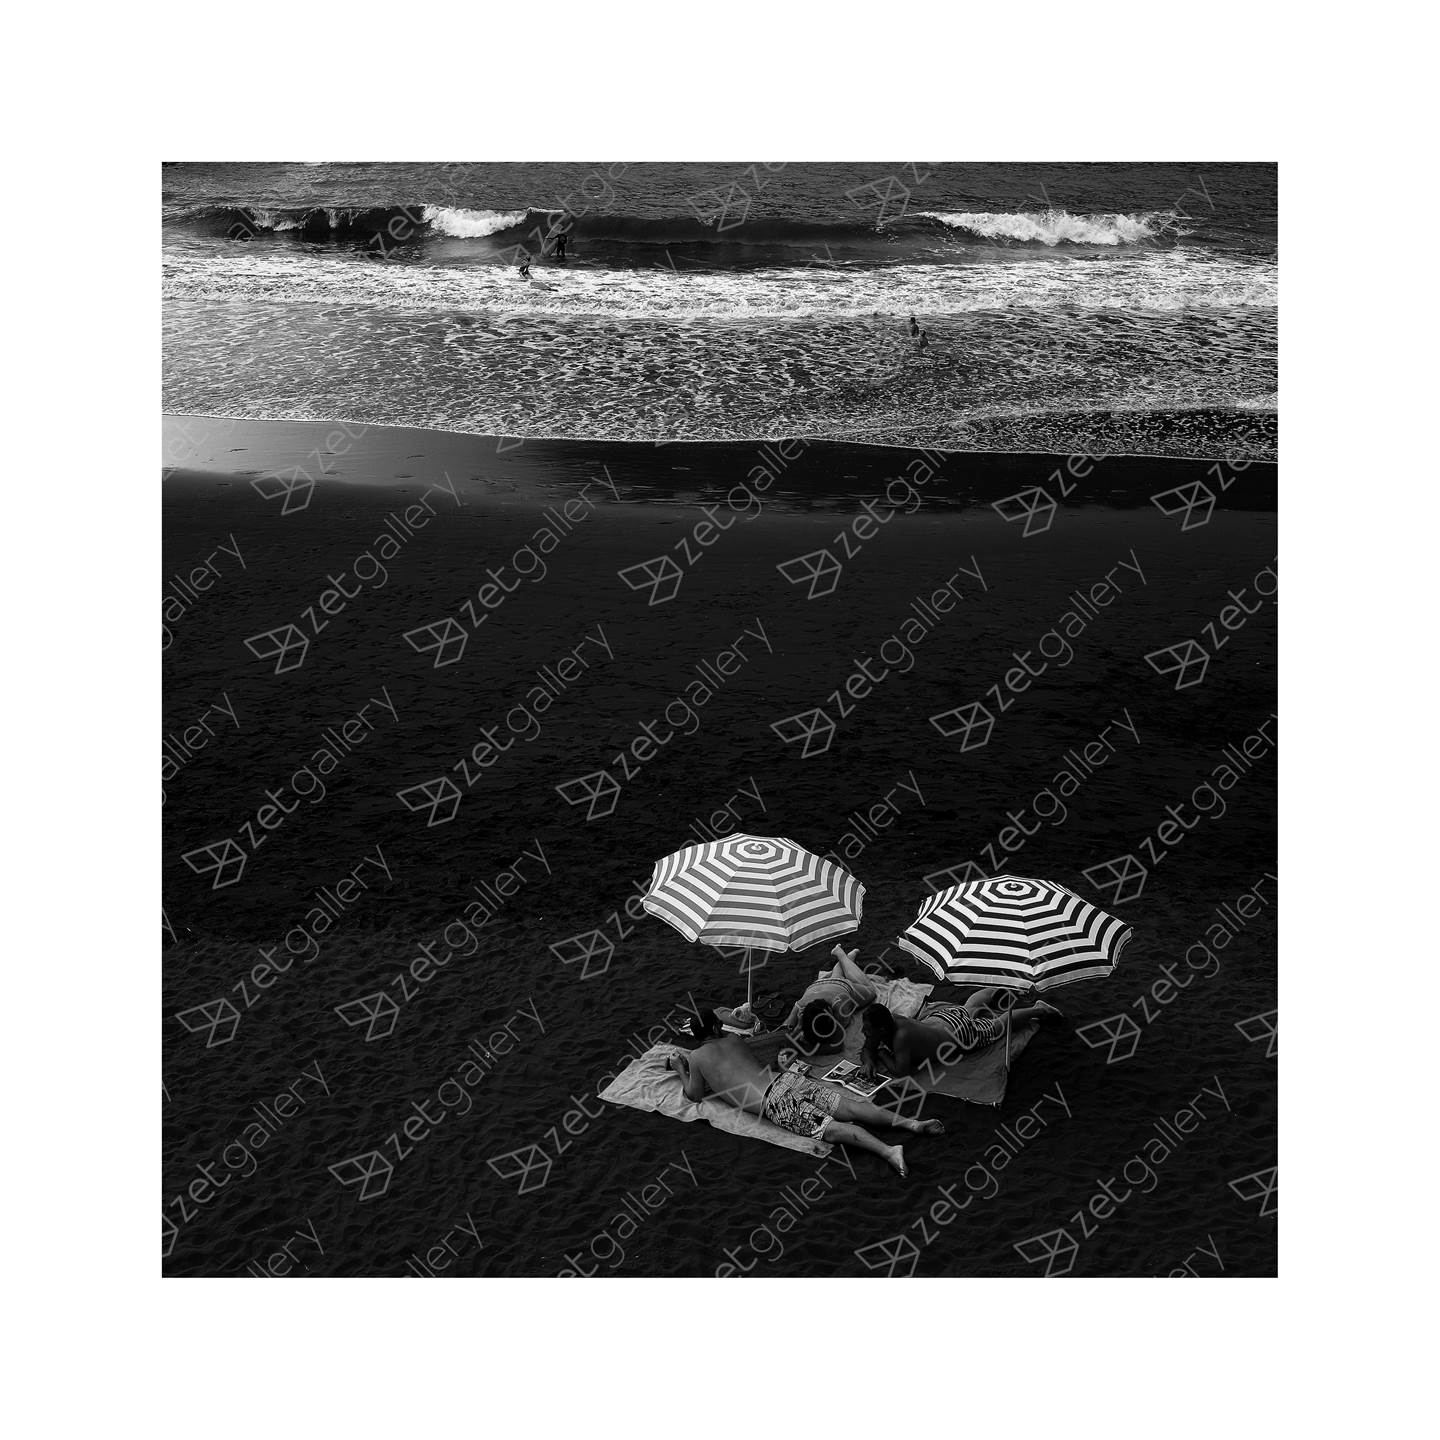 Sunbathers, Fotografia Digital Preto e Branco original por Filipe Bianchi